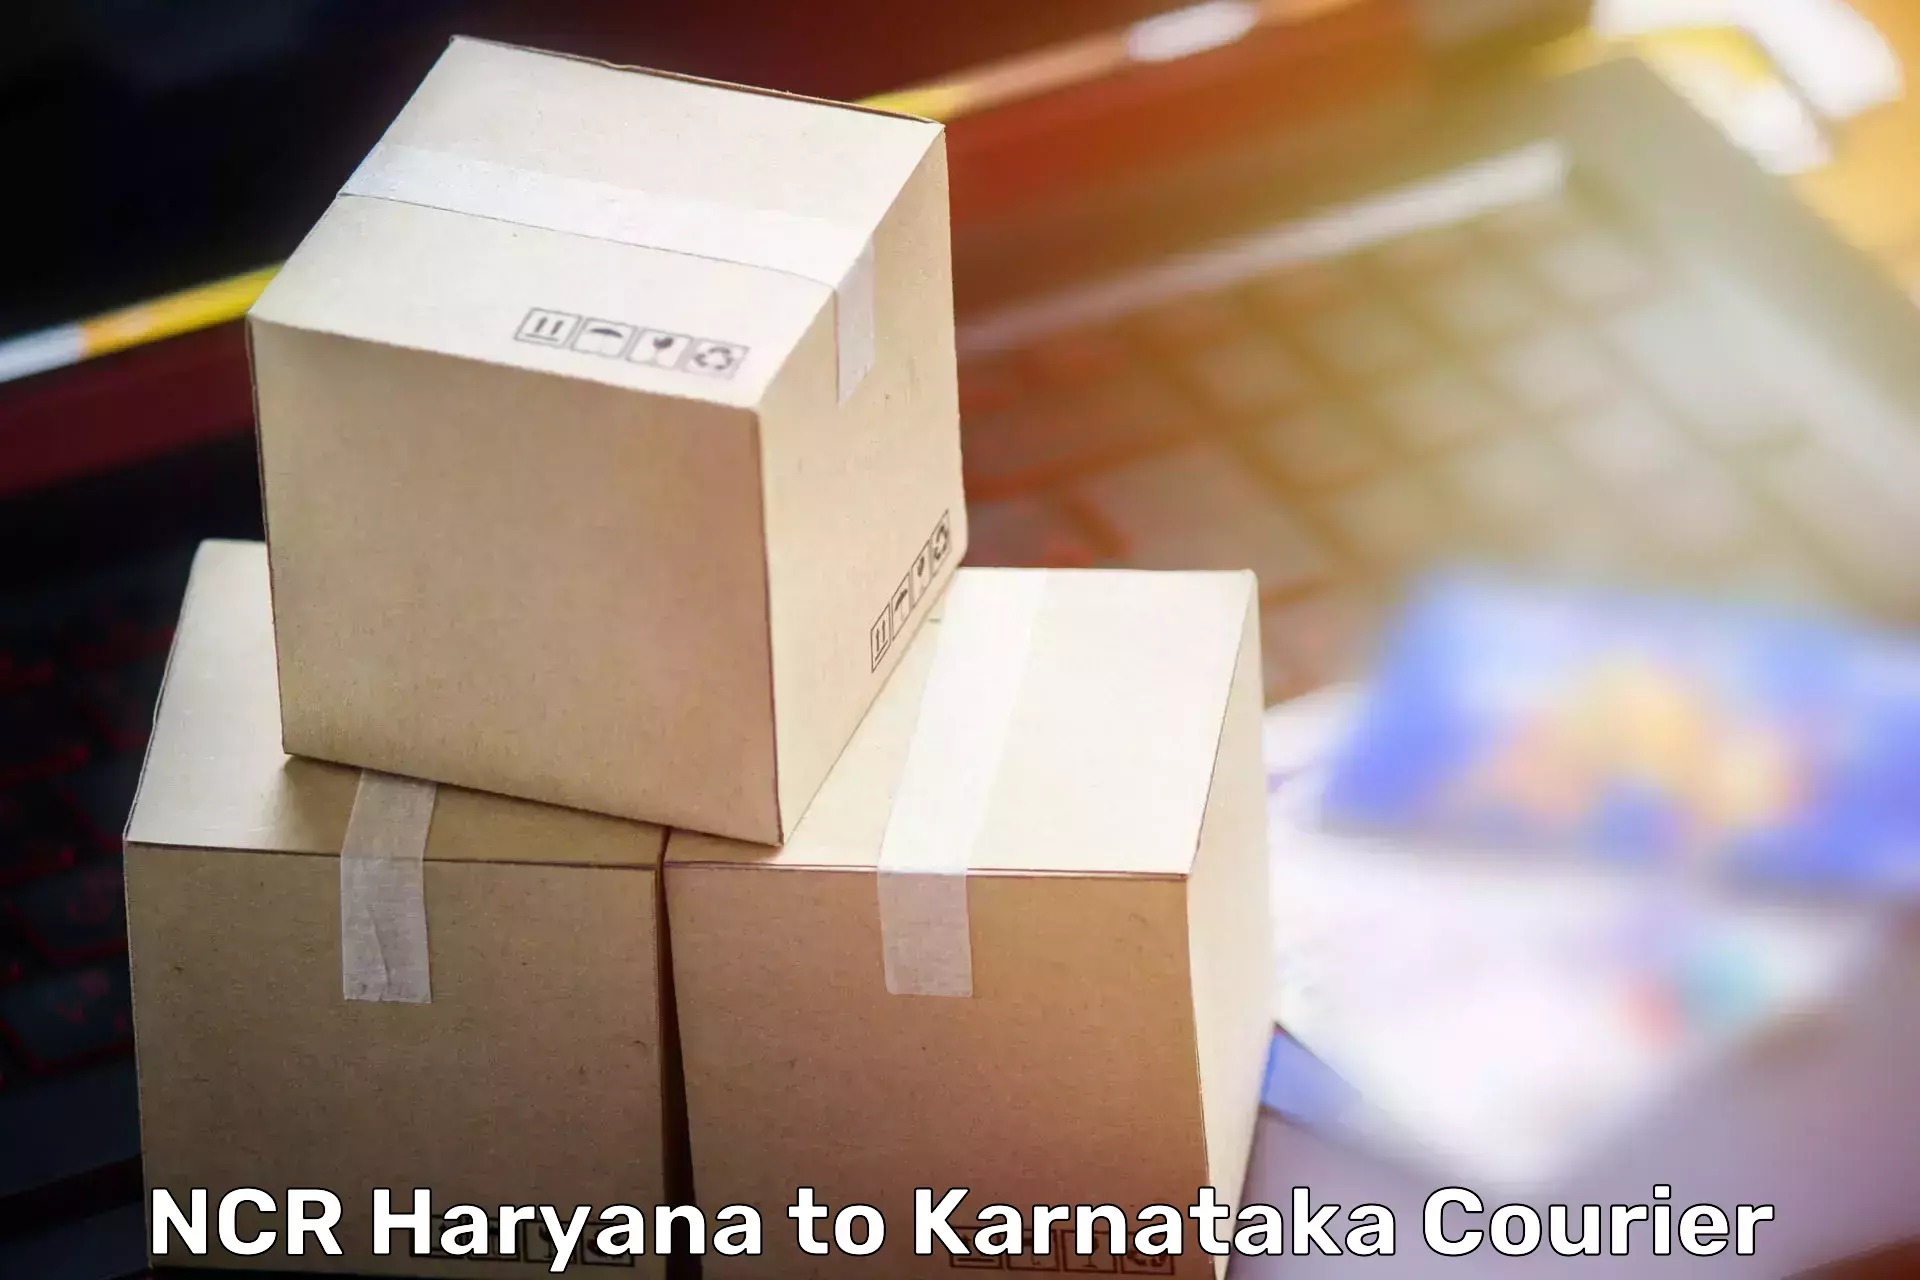 Furniture delivery service NCR Haryana to Kanjarakatte